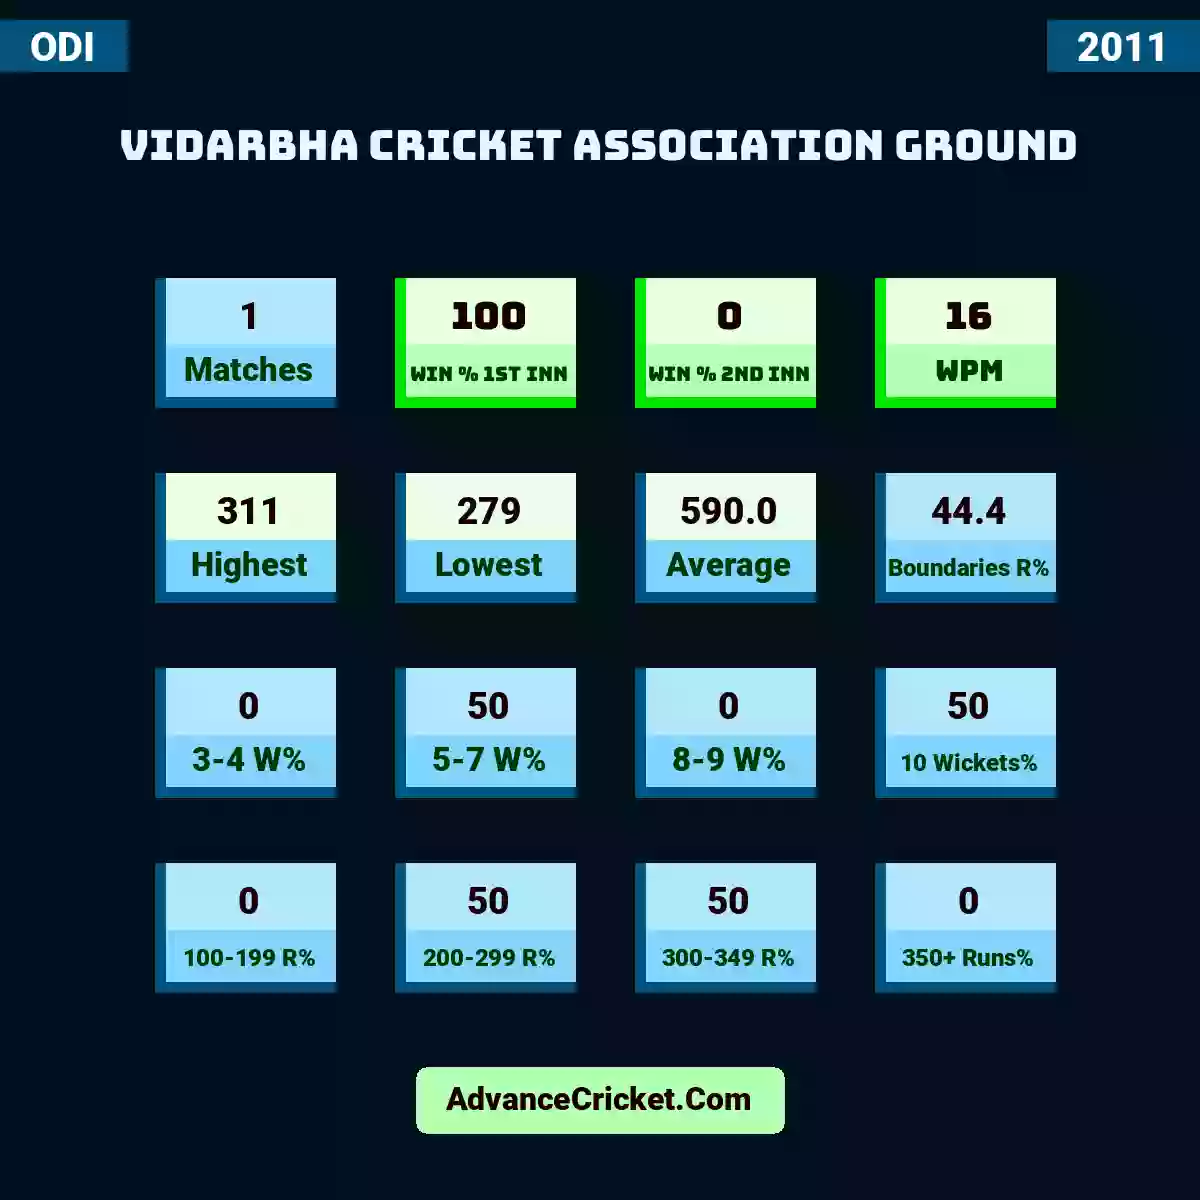 Image showing Vidarbha Cricket Association Ground with Matches: 1, Win % 1st Inn: 100, Win % 2nd Inn: 0, WPM: 16, Highest: 311, Lowest: 279, Average: 590.0, Boundaries R%: 44.4, 3-4 W%: 0, 5-7 W%: 50, 8-9 W%: 0, 10 Wickets%: 50, 100-199 R%: 0, 200-299 R%: 50, 300-349 R%: 50, 350+ Runs%: 0.